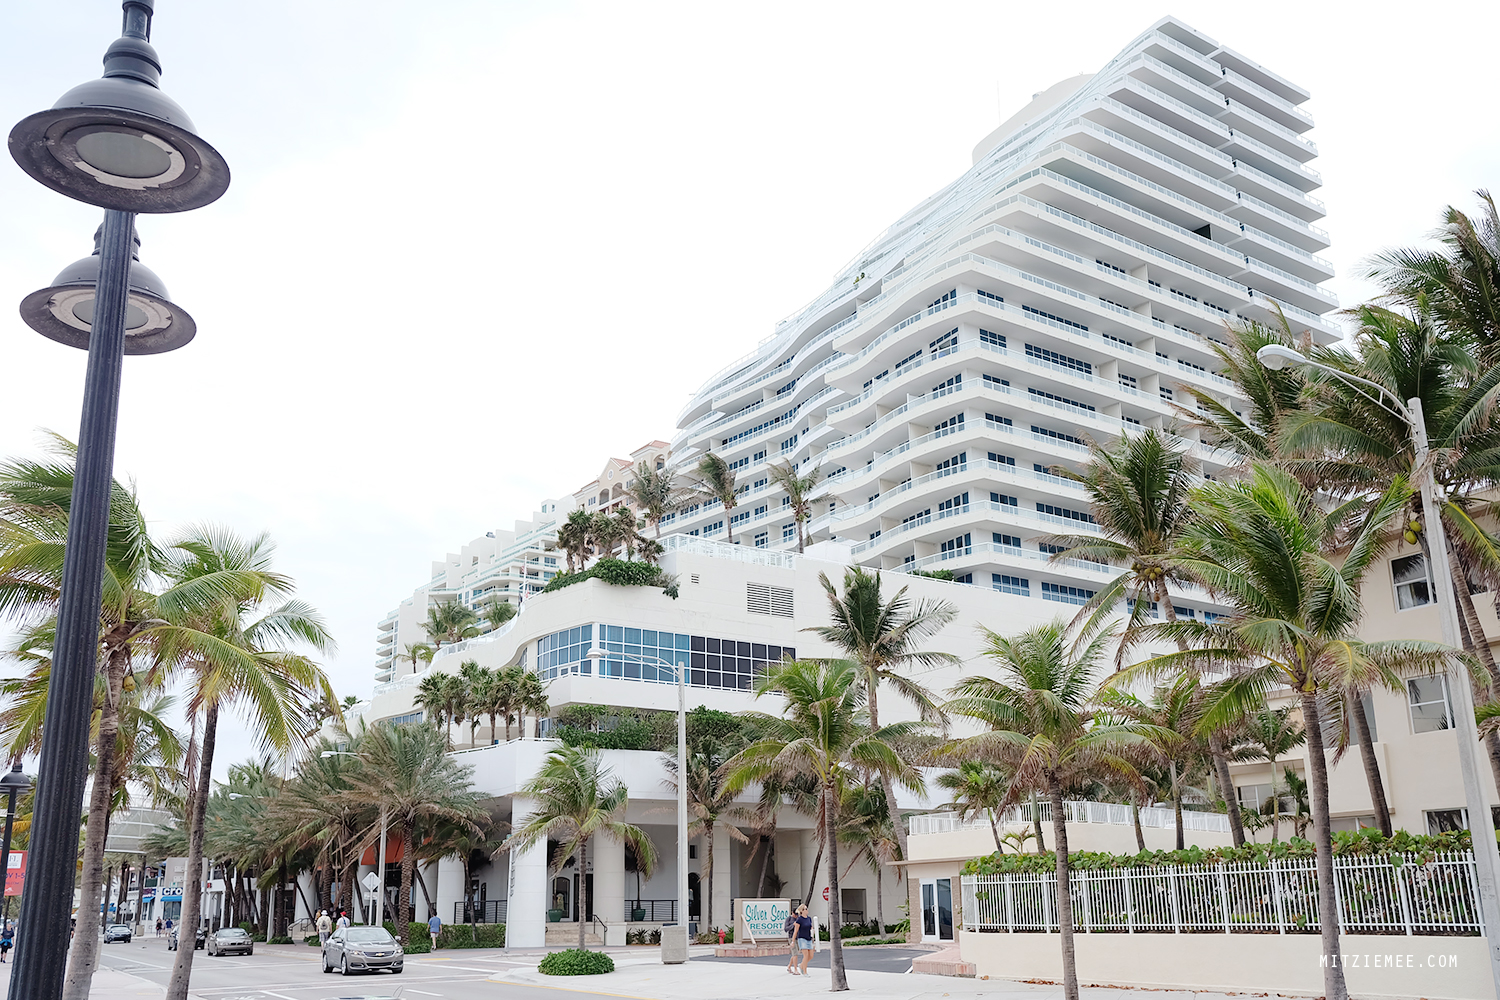 Ritz-Carlton, Fort Lauderdale